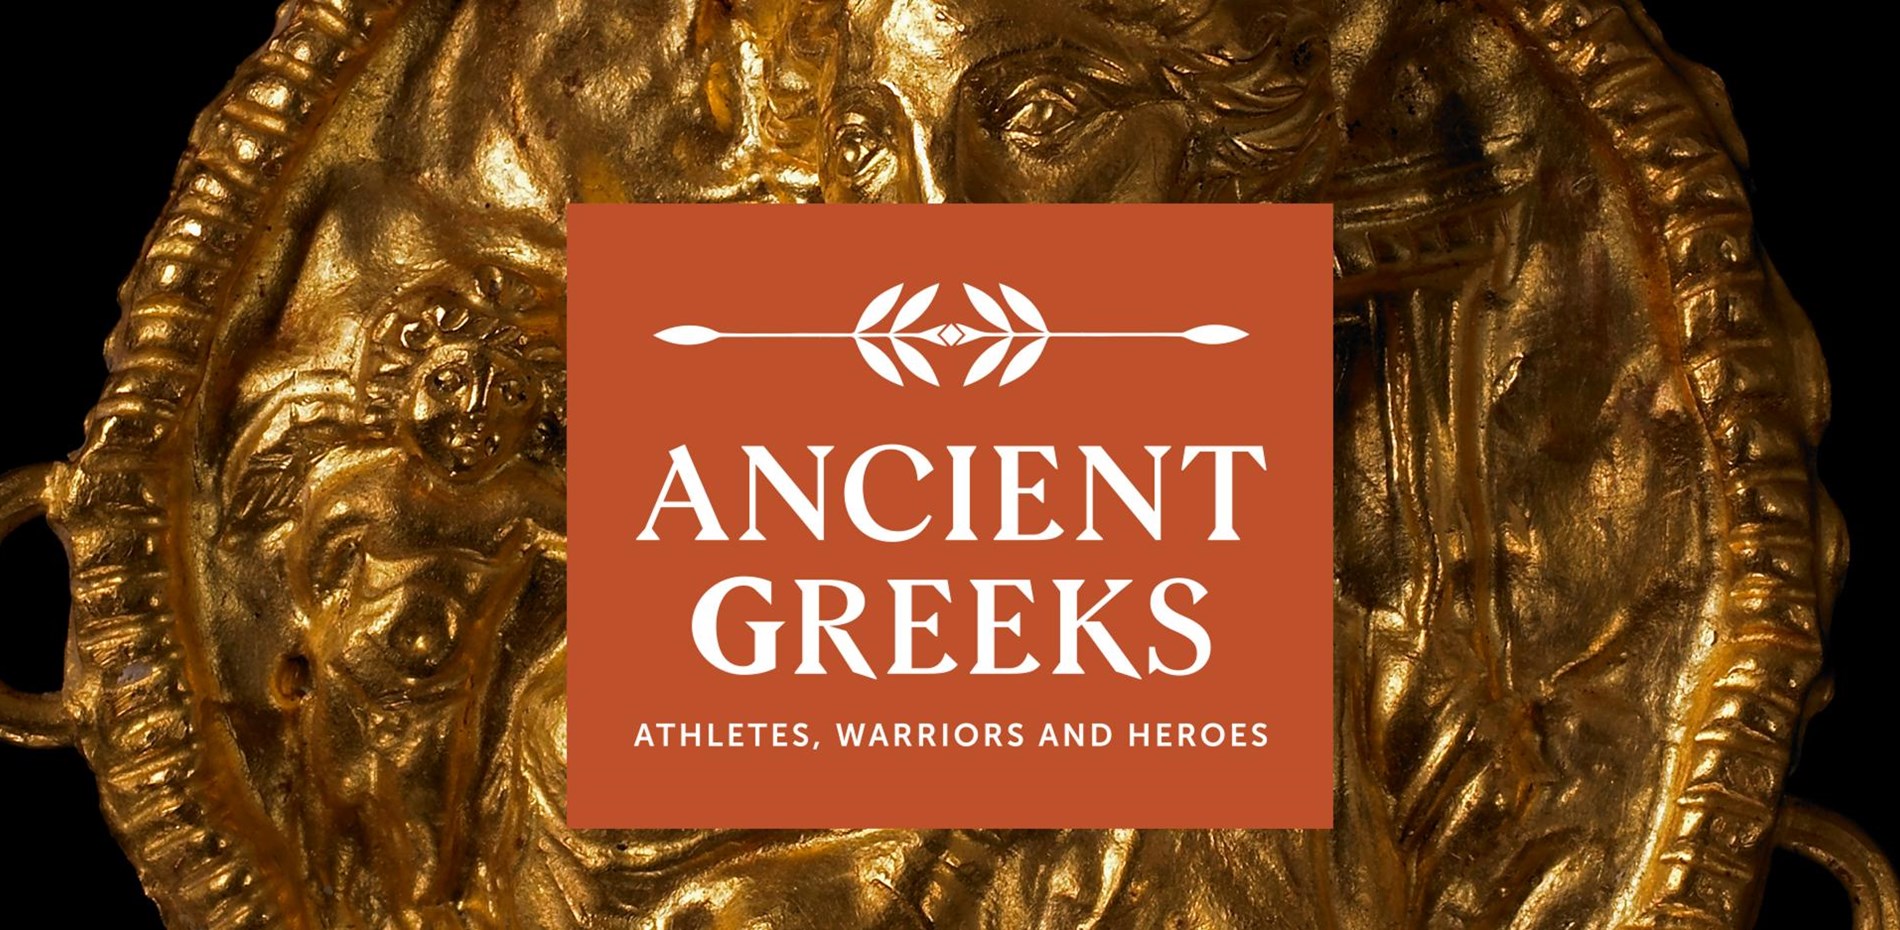 Ancient Greek exhibition first international show at WA Museum Boola Bardip Main Image